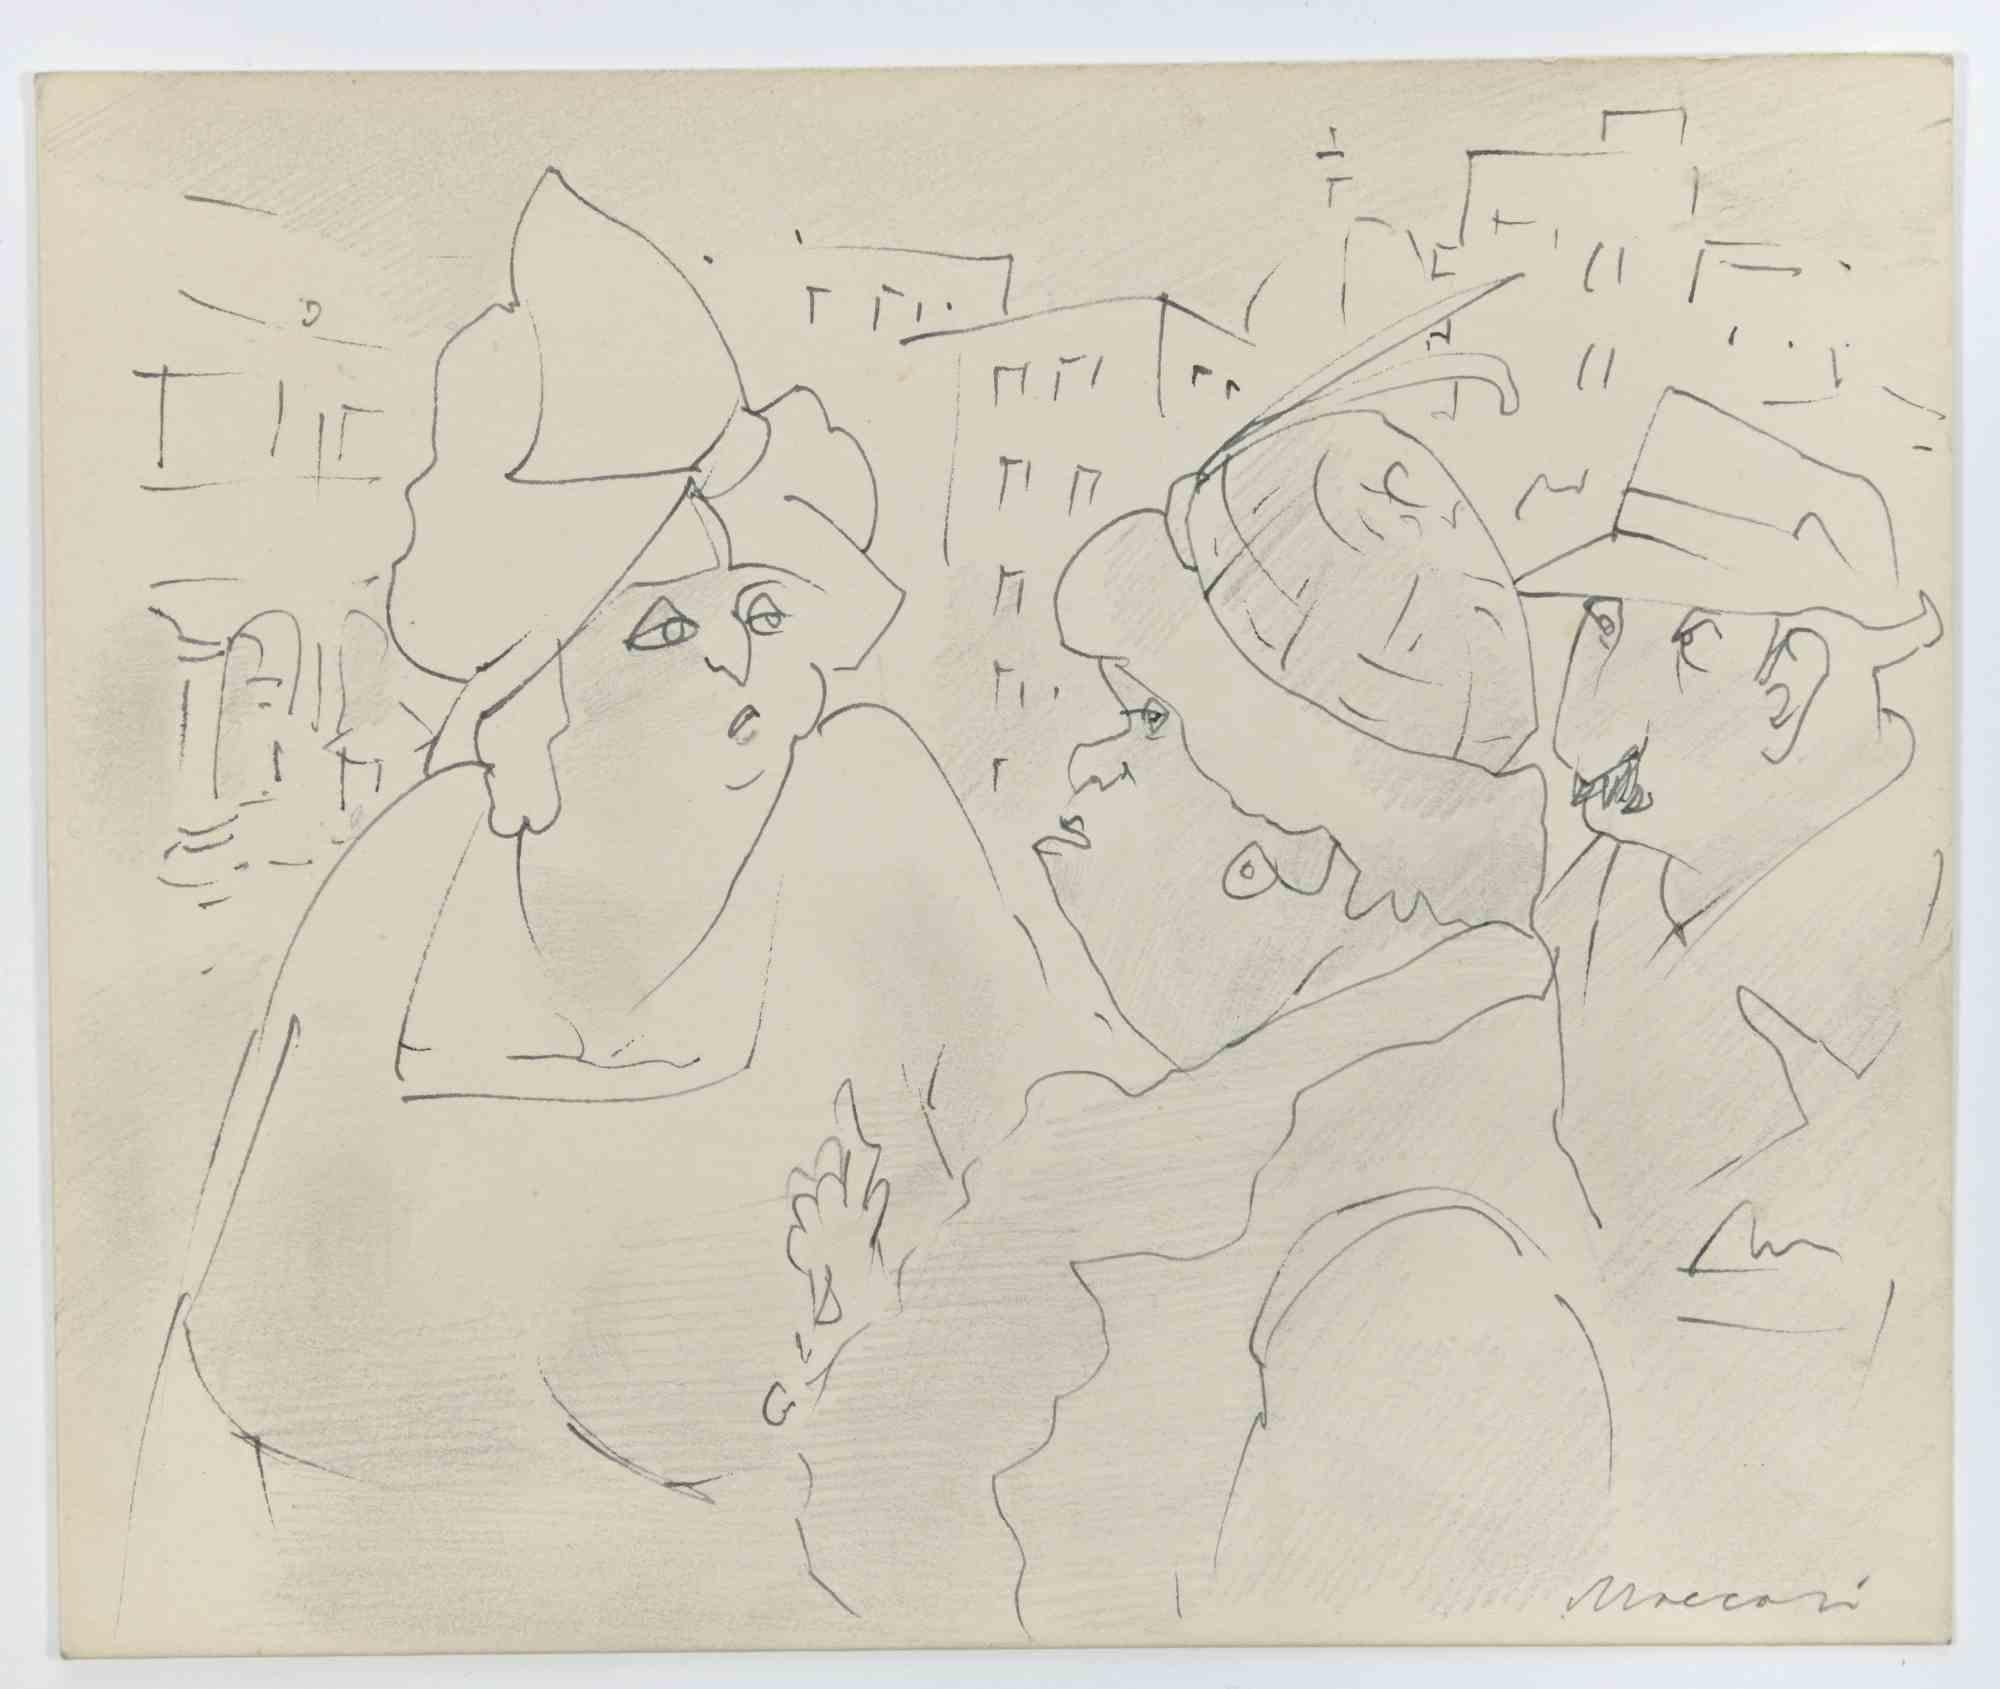 Snobby  - Drawing by Mino Maccari - 1945